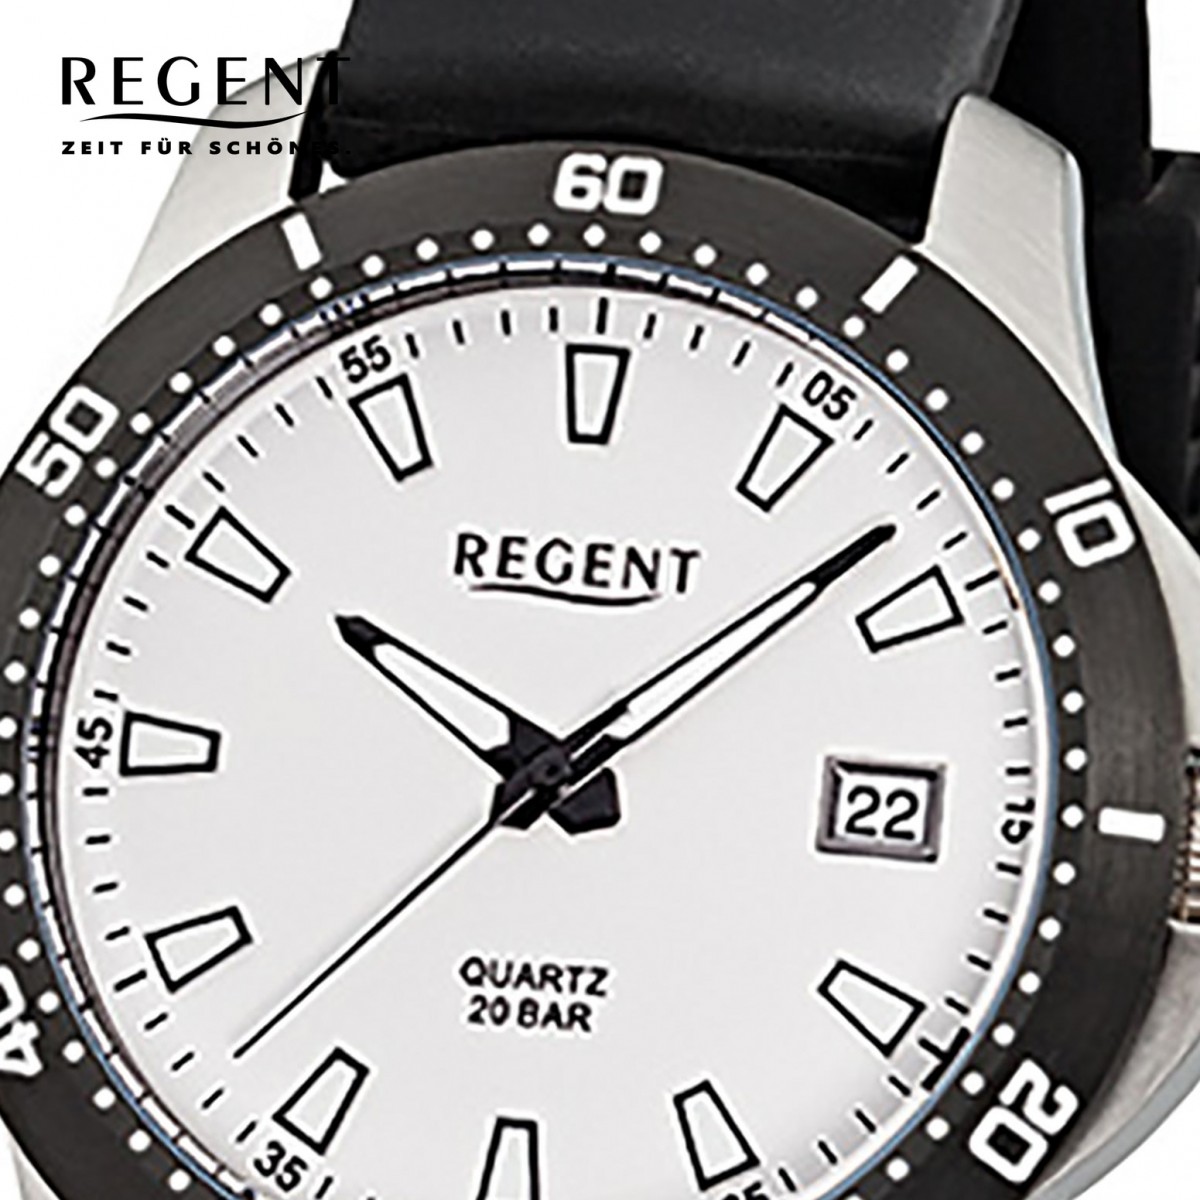 F-912 Herren-Armbanduhr URF912 Quarz-Uhr schwarz Kunststoff-Armband Regent